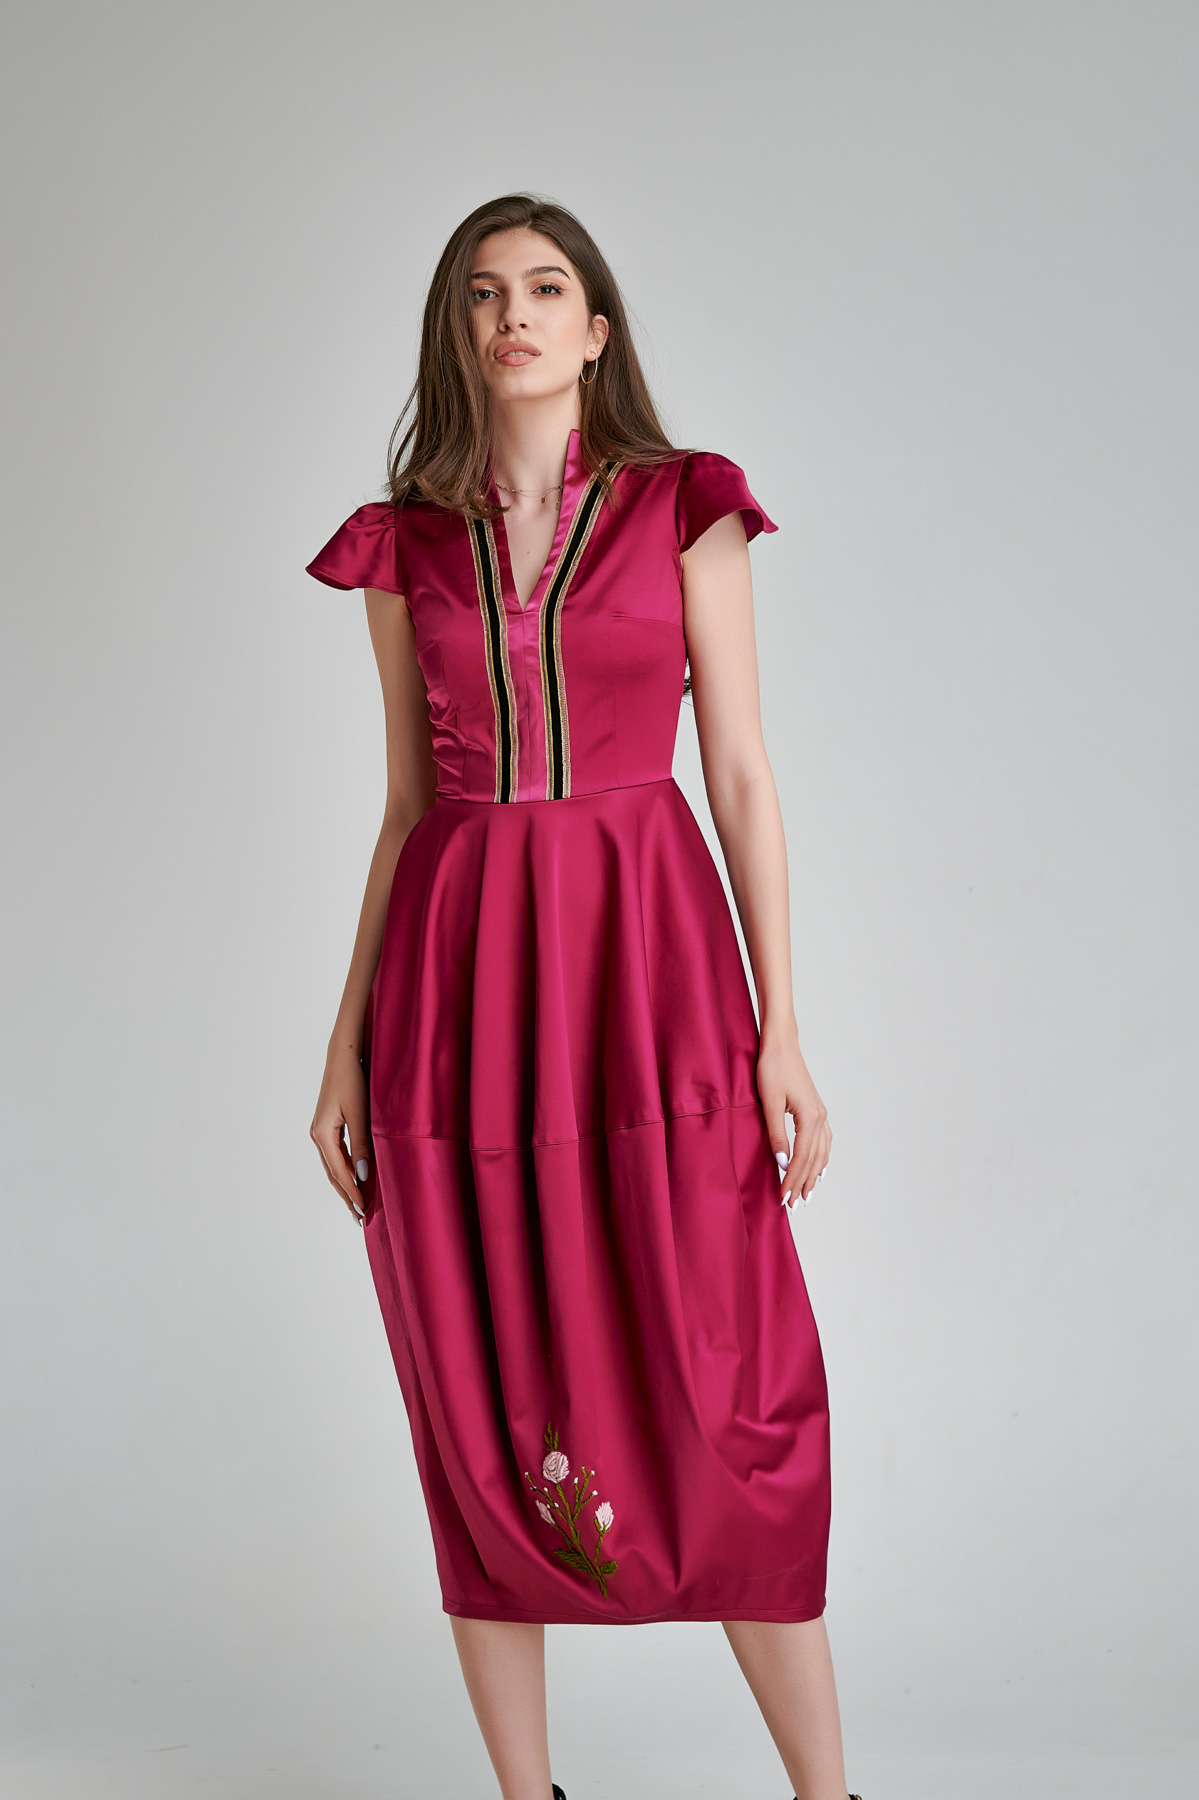 ADIRA elegant dress in magenta satin fabric. Natural fabrics, original design, handmade embroidery